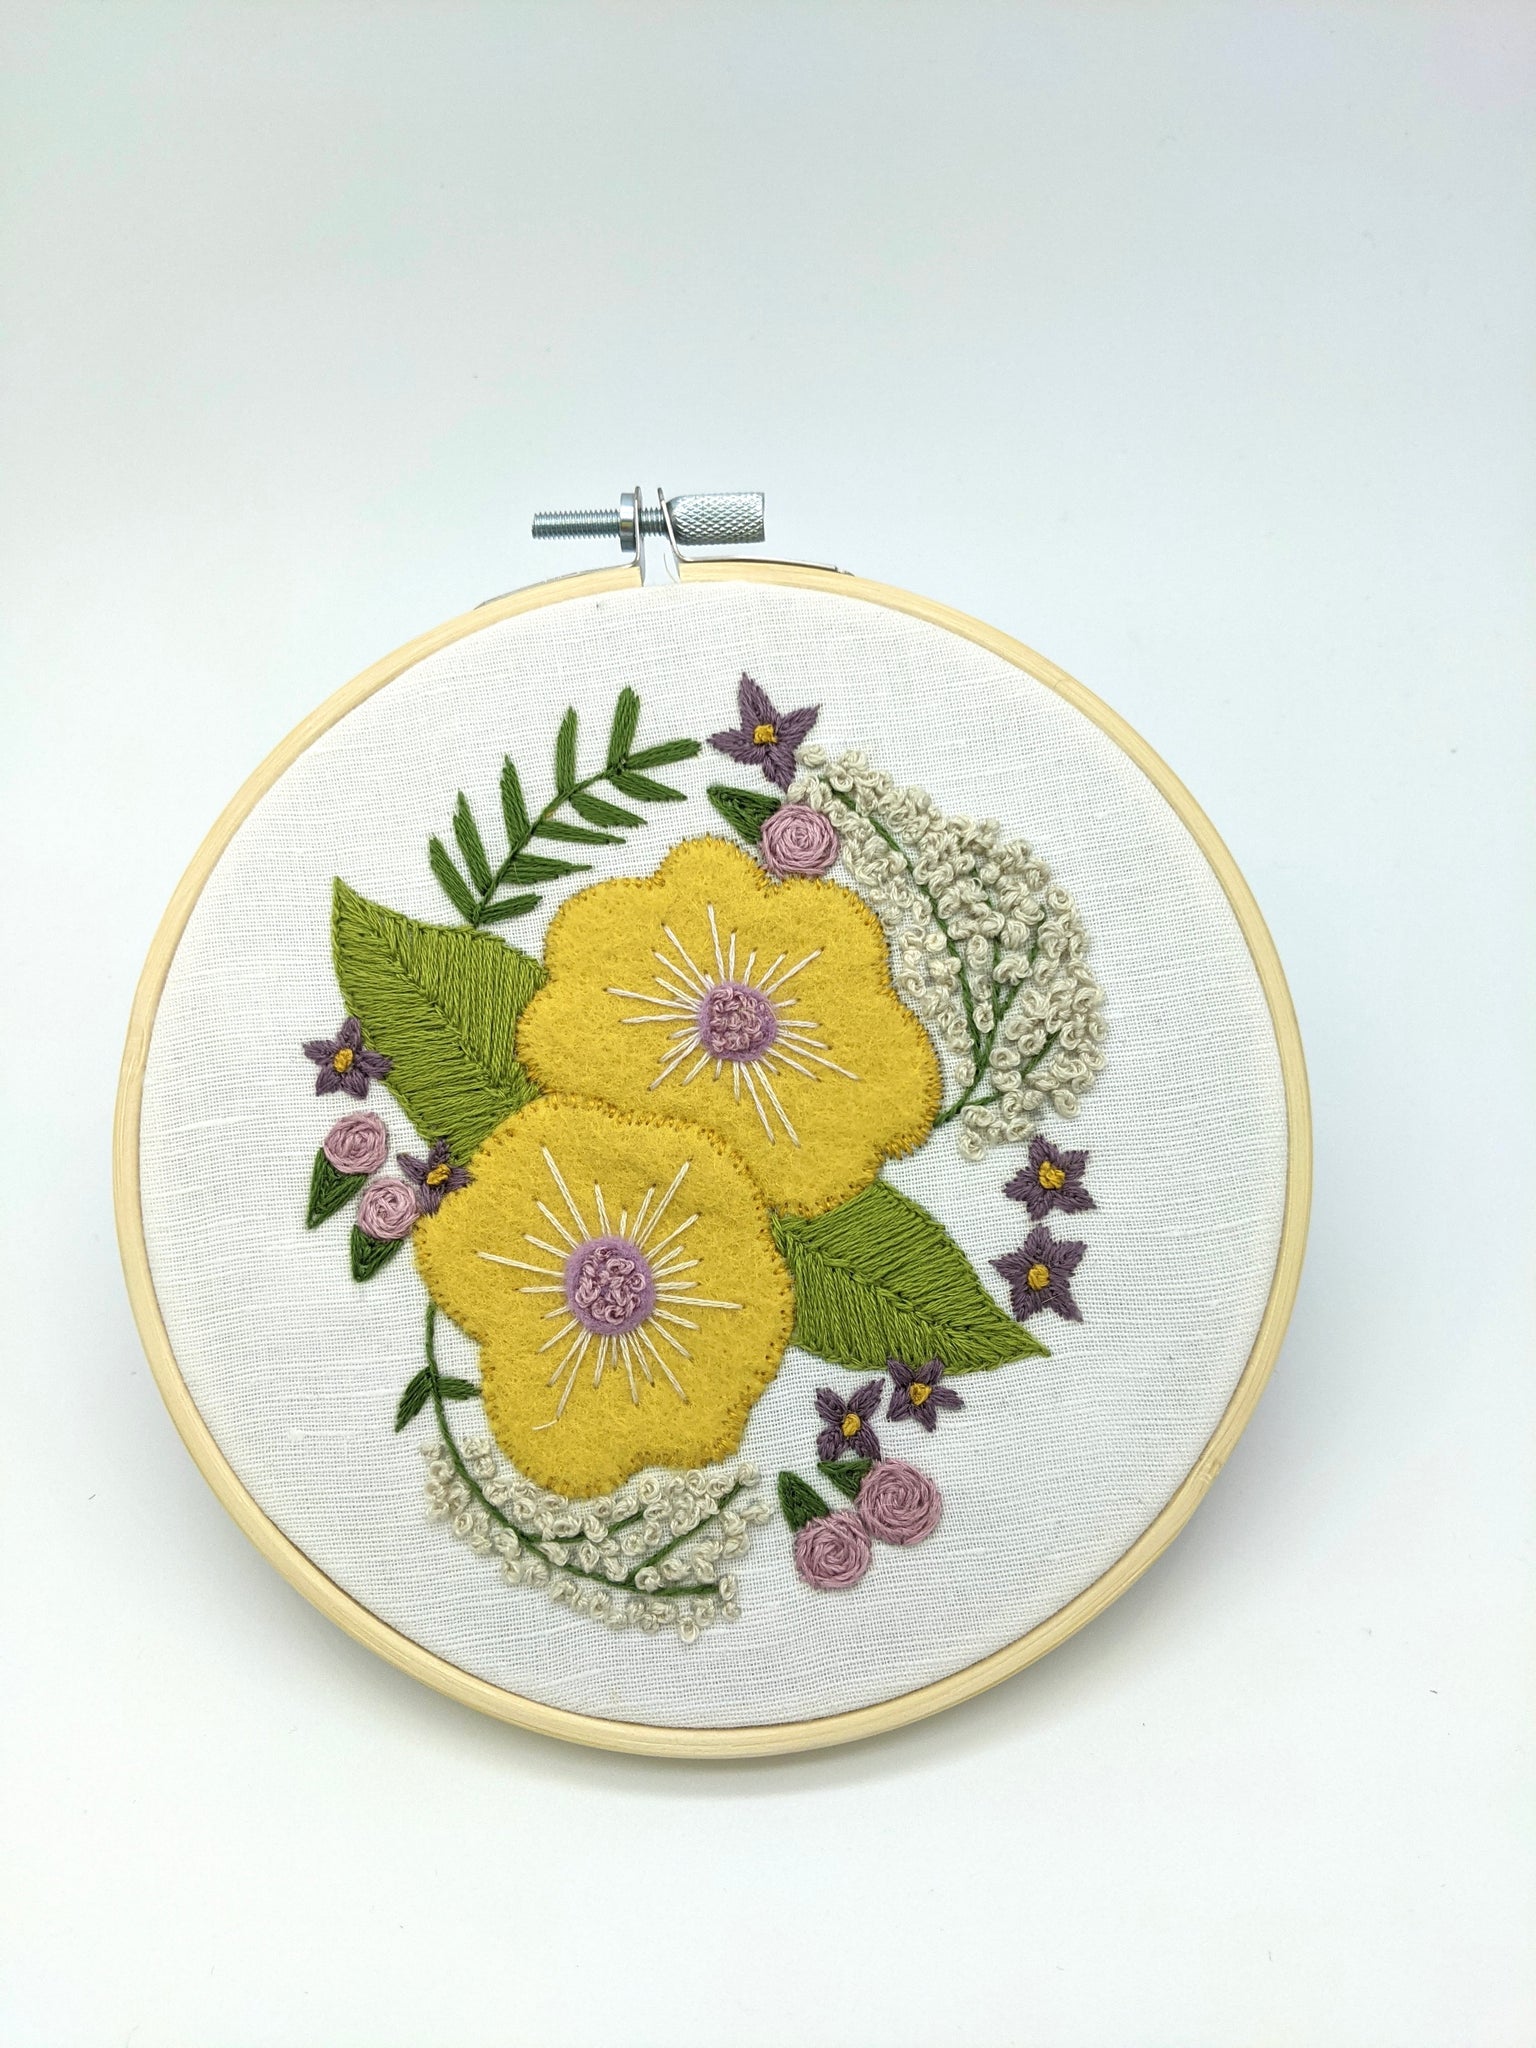 Floral Felt Floral Embroidery Kit SALE – Hatch Goods